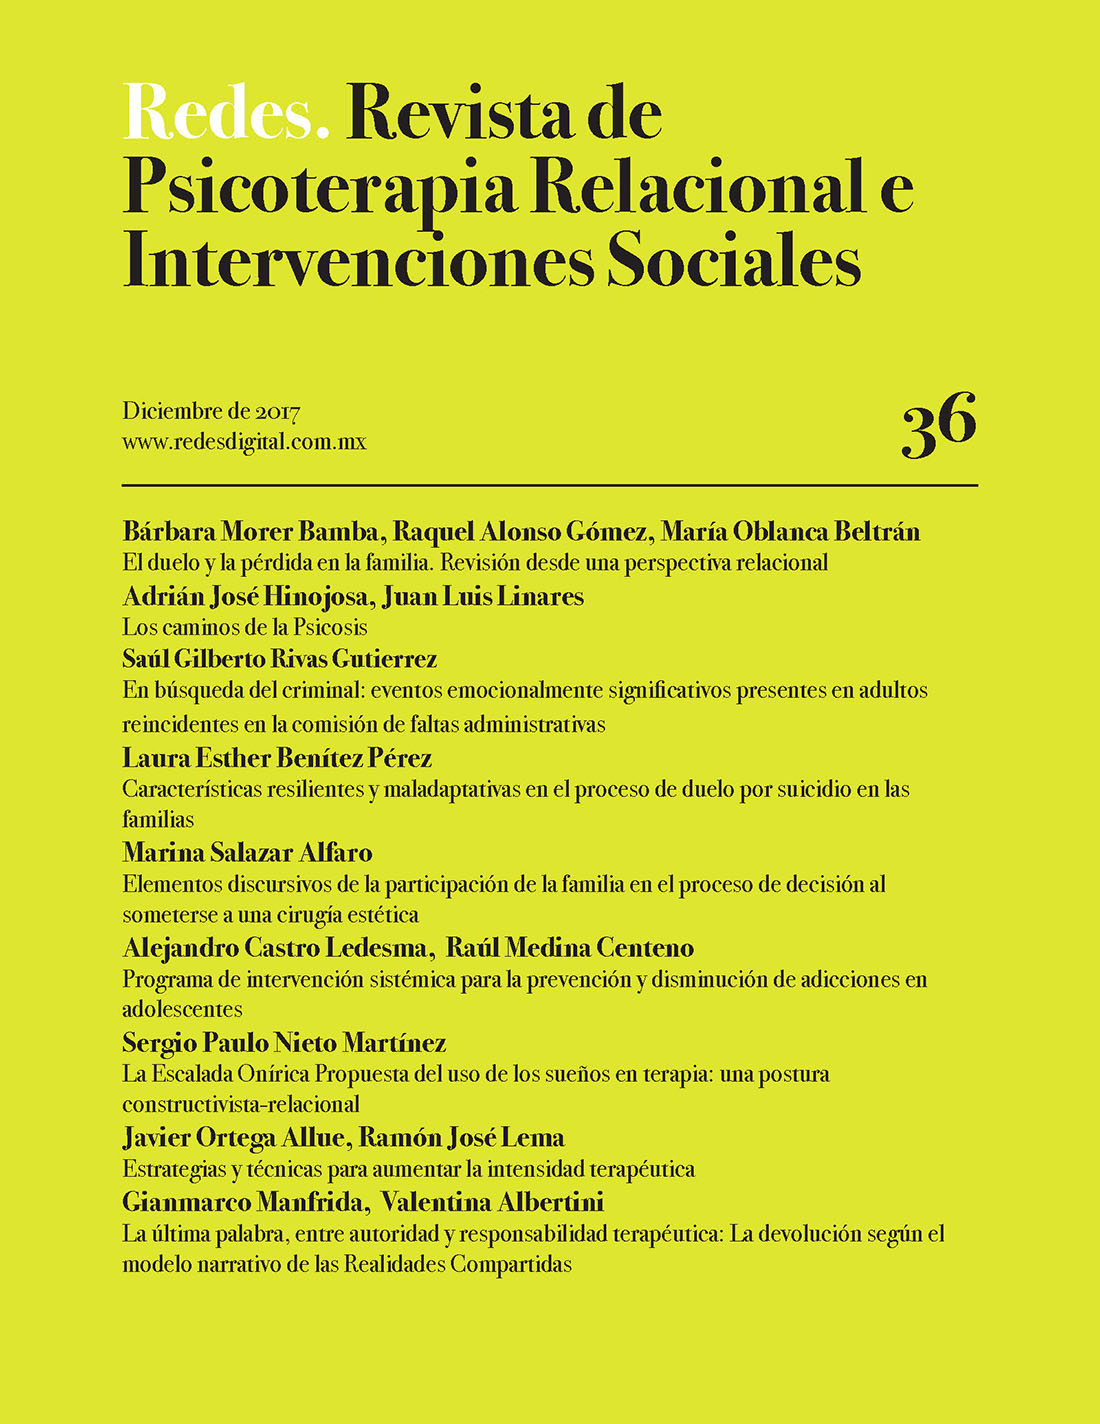 Redes. Revista de Psicoterapia Relacional e Intervenciones Sociales. Diciembre, 2017